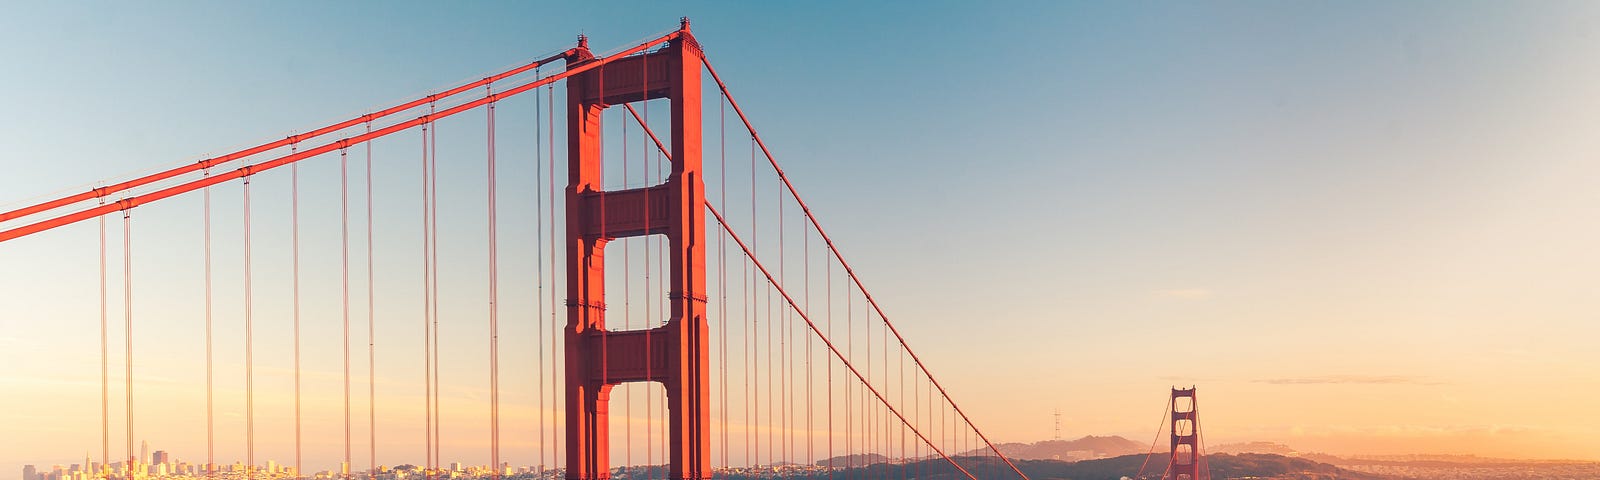 Sunset at the Golden Gate Bridge, San Francisco California